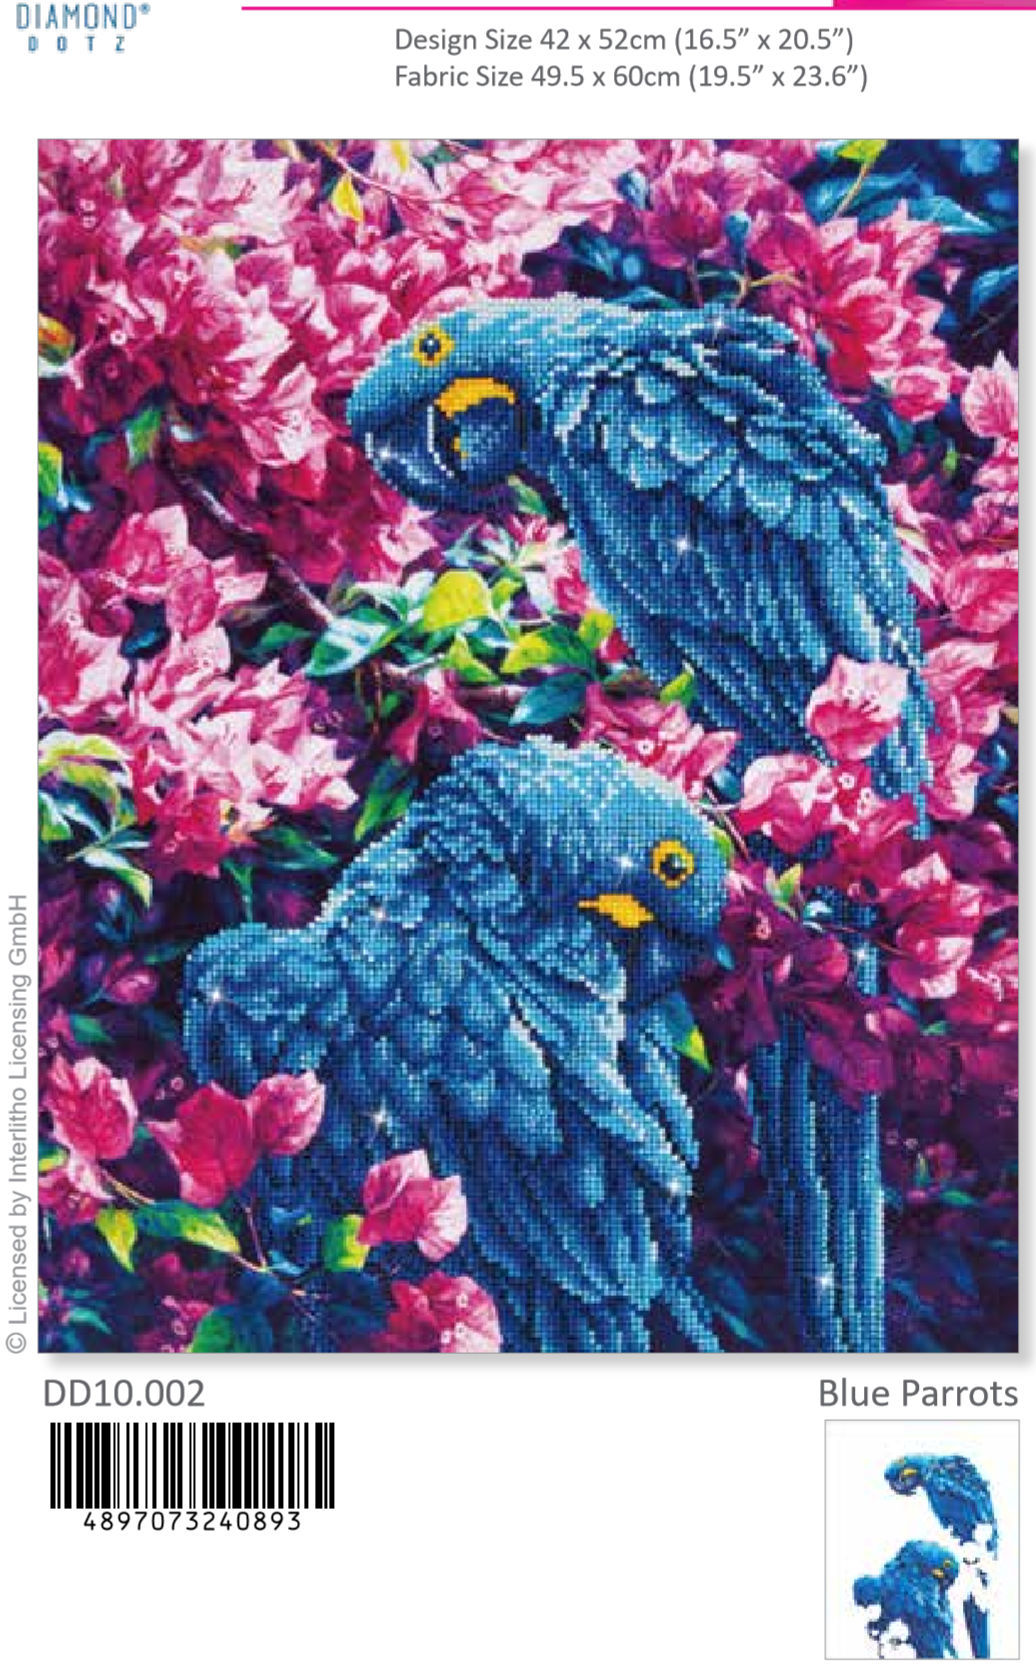 Diamond Dotz 5D Embroidery Facet Art Kit Intermediate Blue Parrots DD10.002 